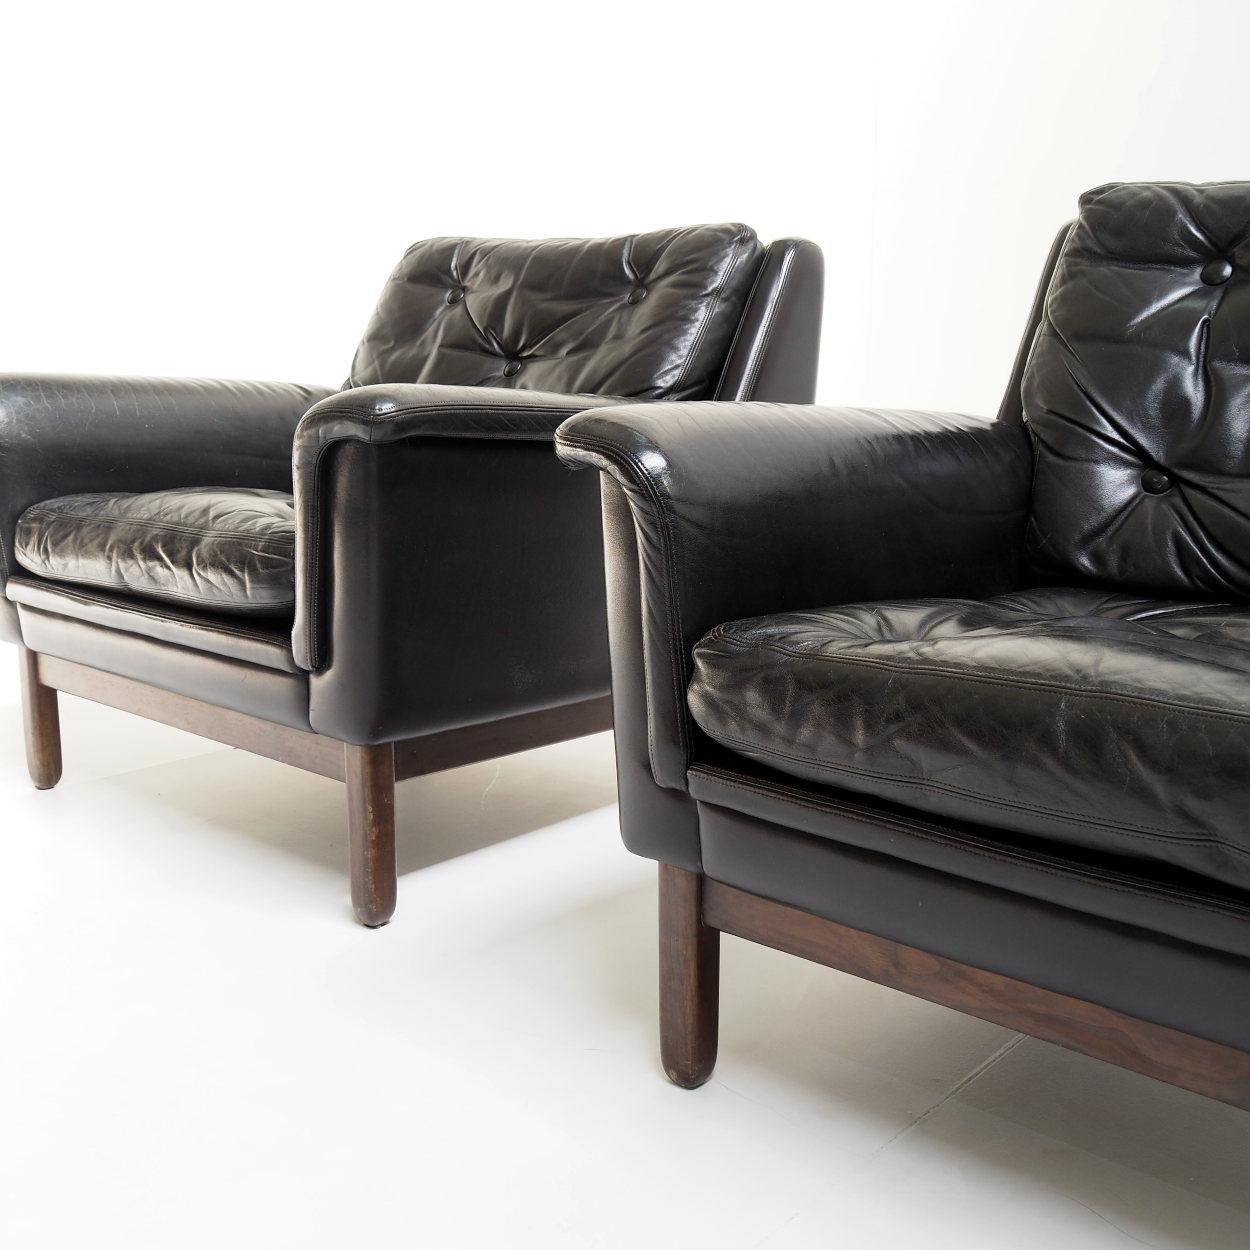 Scandinavian Modern Set of Leather Lounche Chairs Attr. to Karl Erik Ekselius. Sweden 1960s